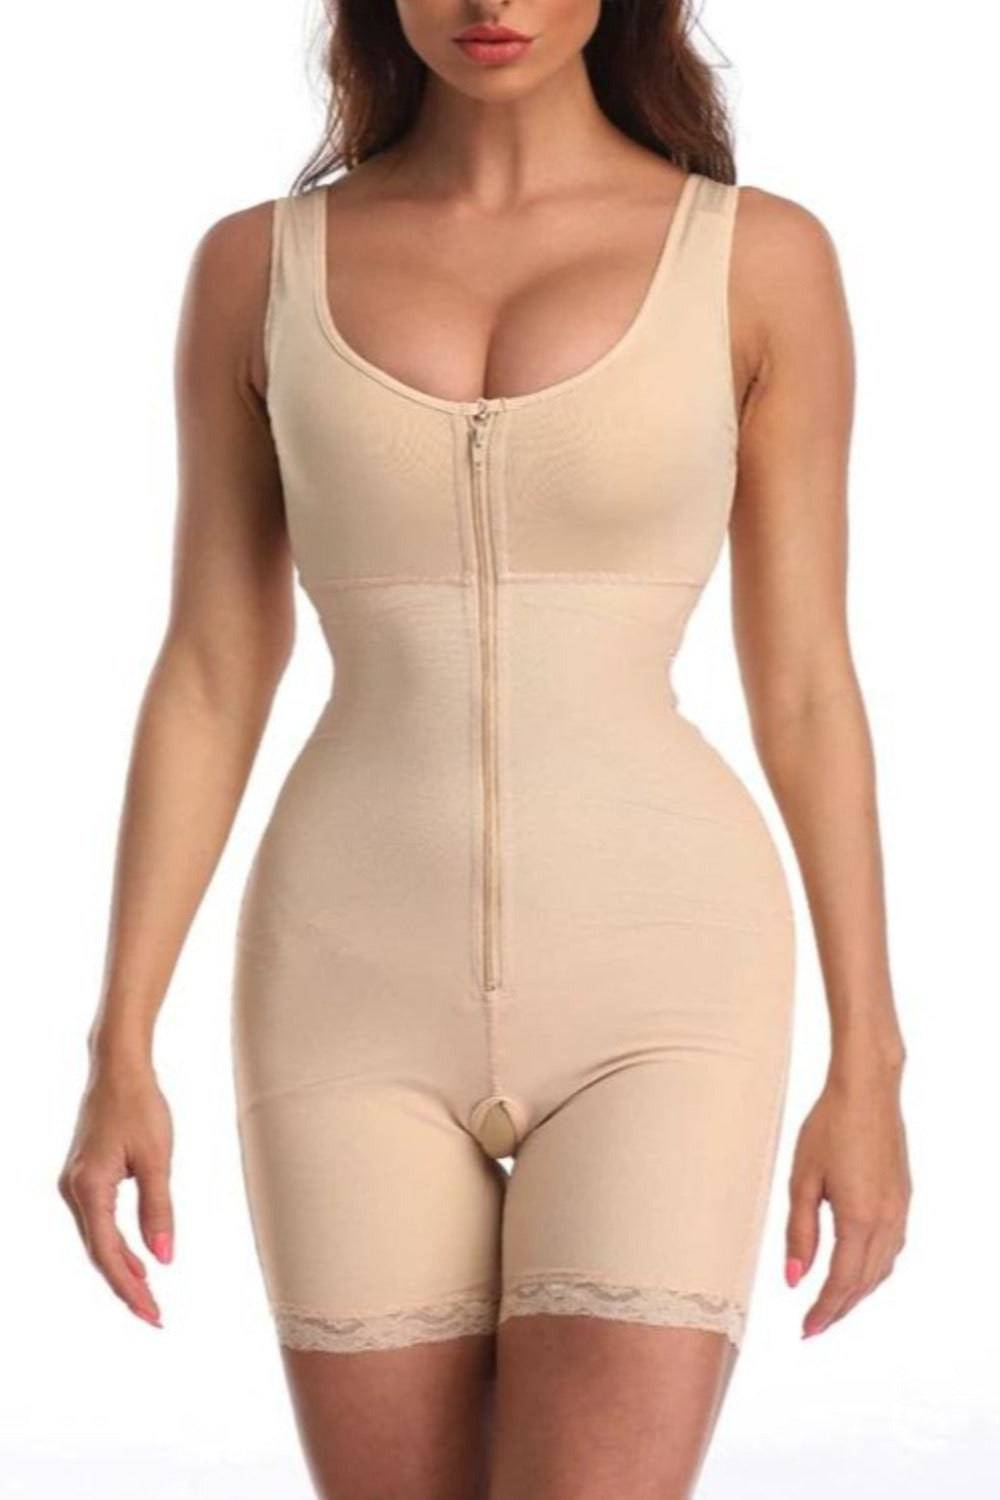 Full Body Shaper Female Slimming Bodysuit Plus Size Open Crotch